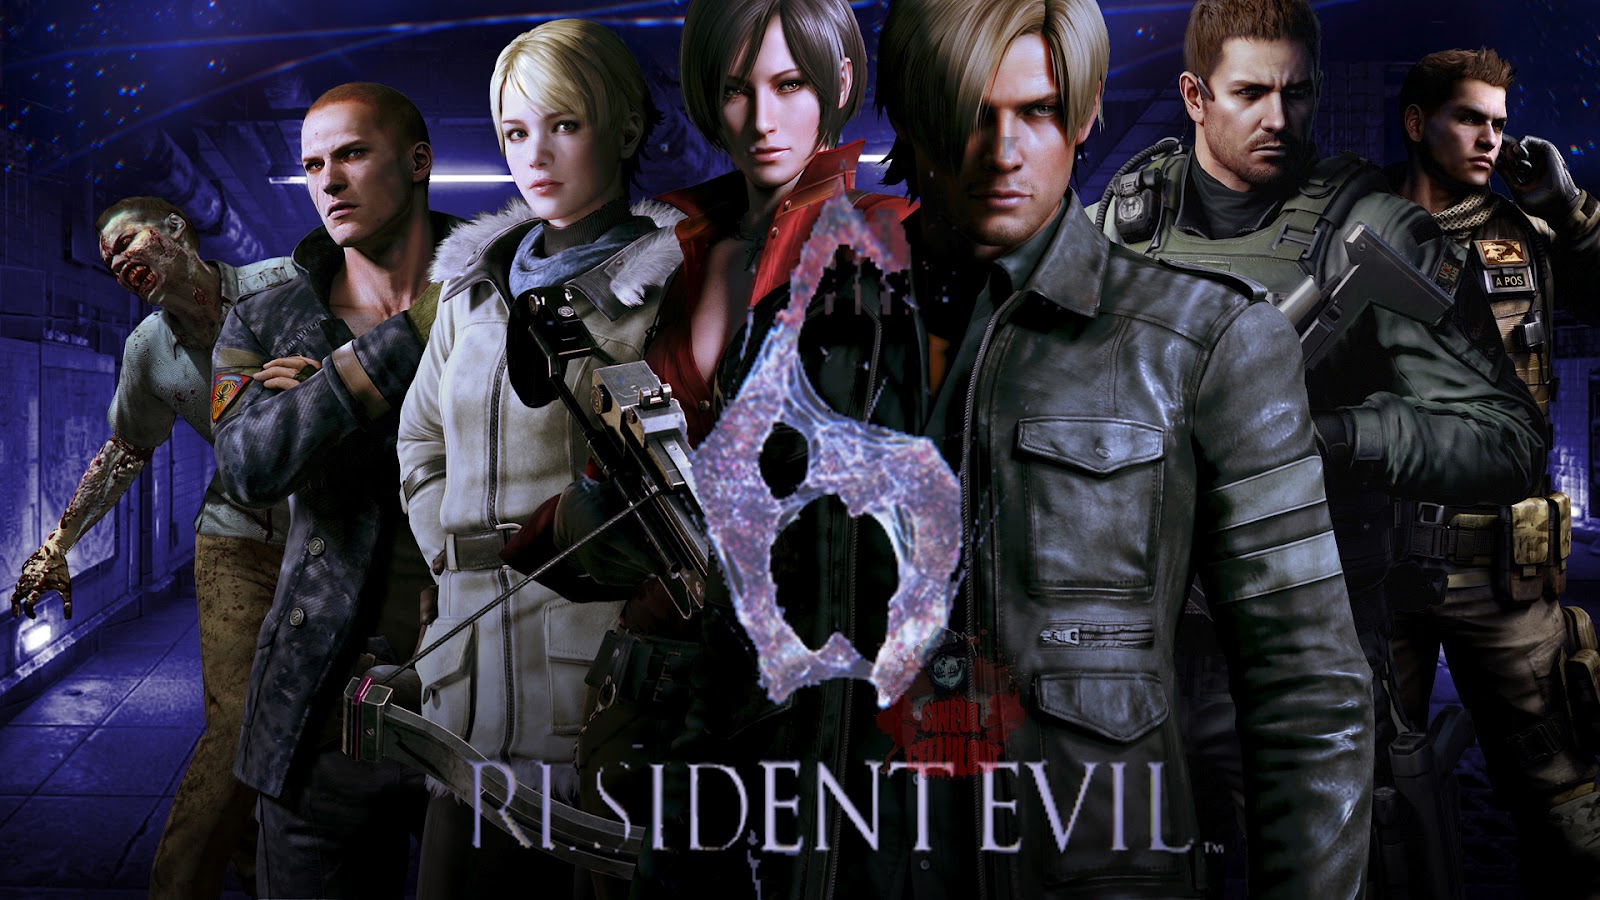 Blog Serbaguna: Free Download Resident Evil 6 Full Version for PC